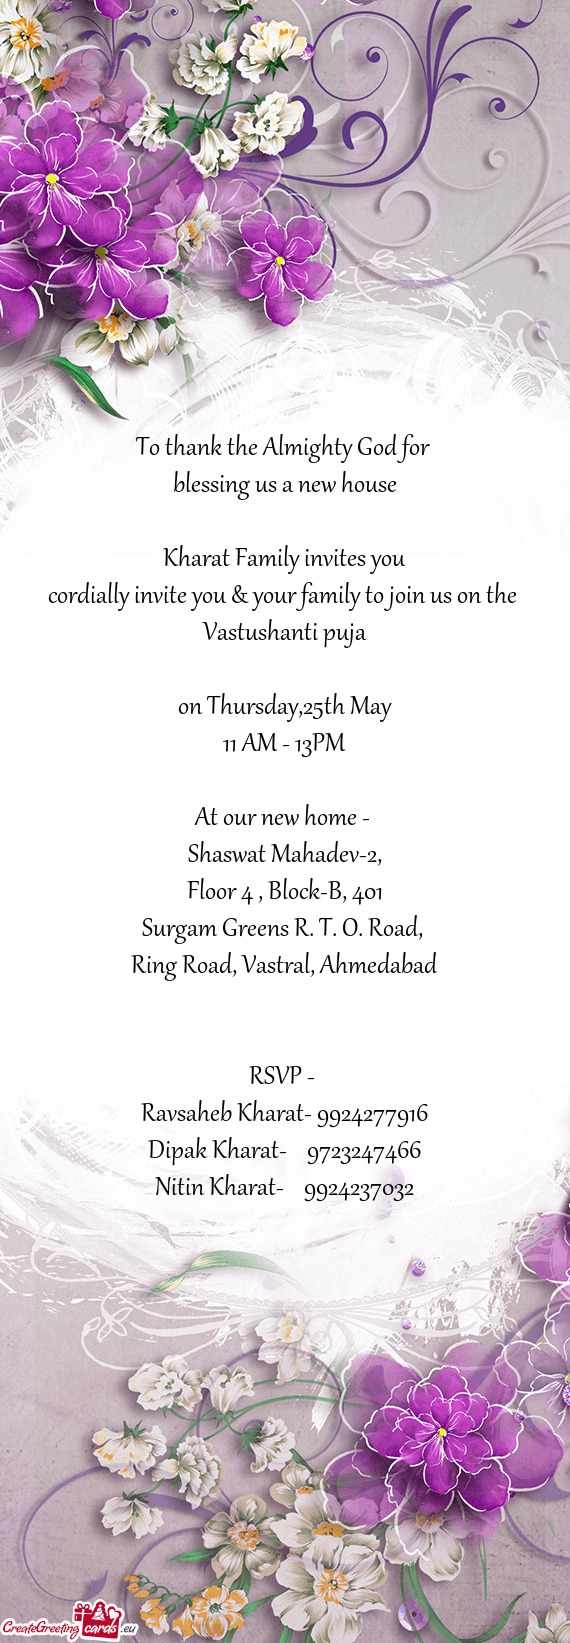 Kharat Family invites you